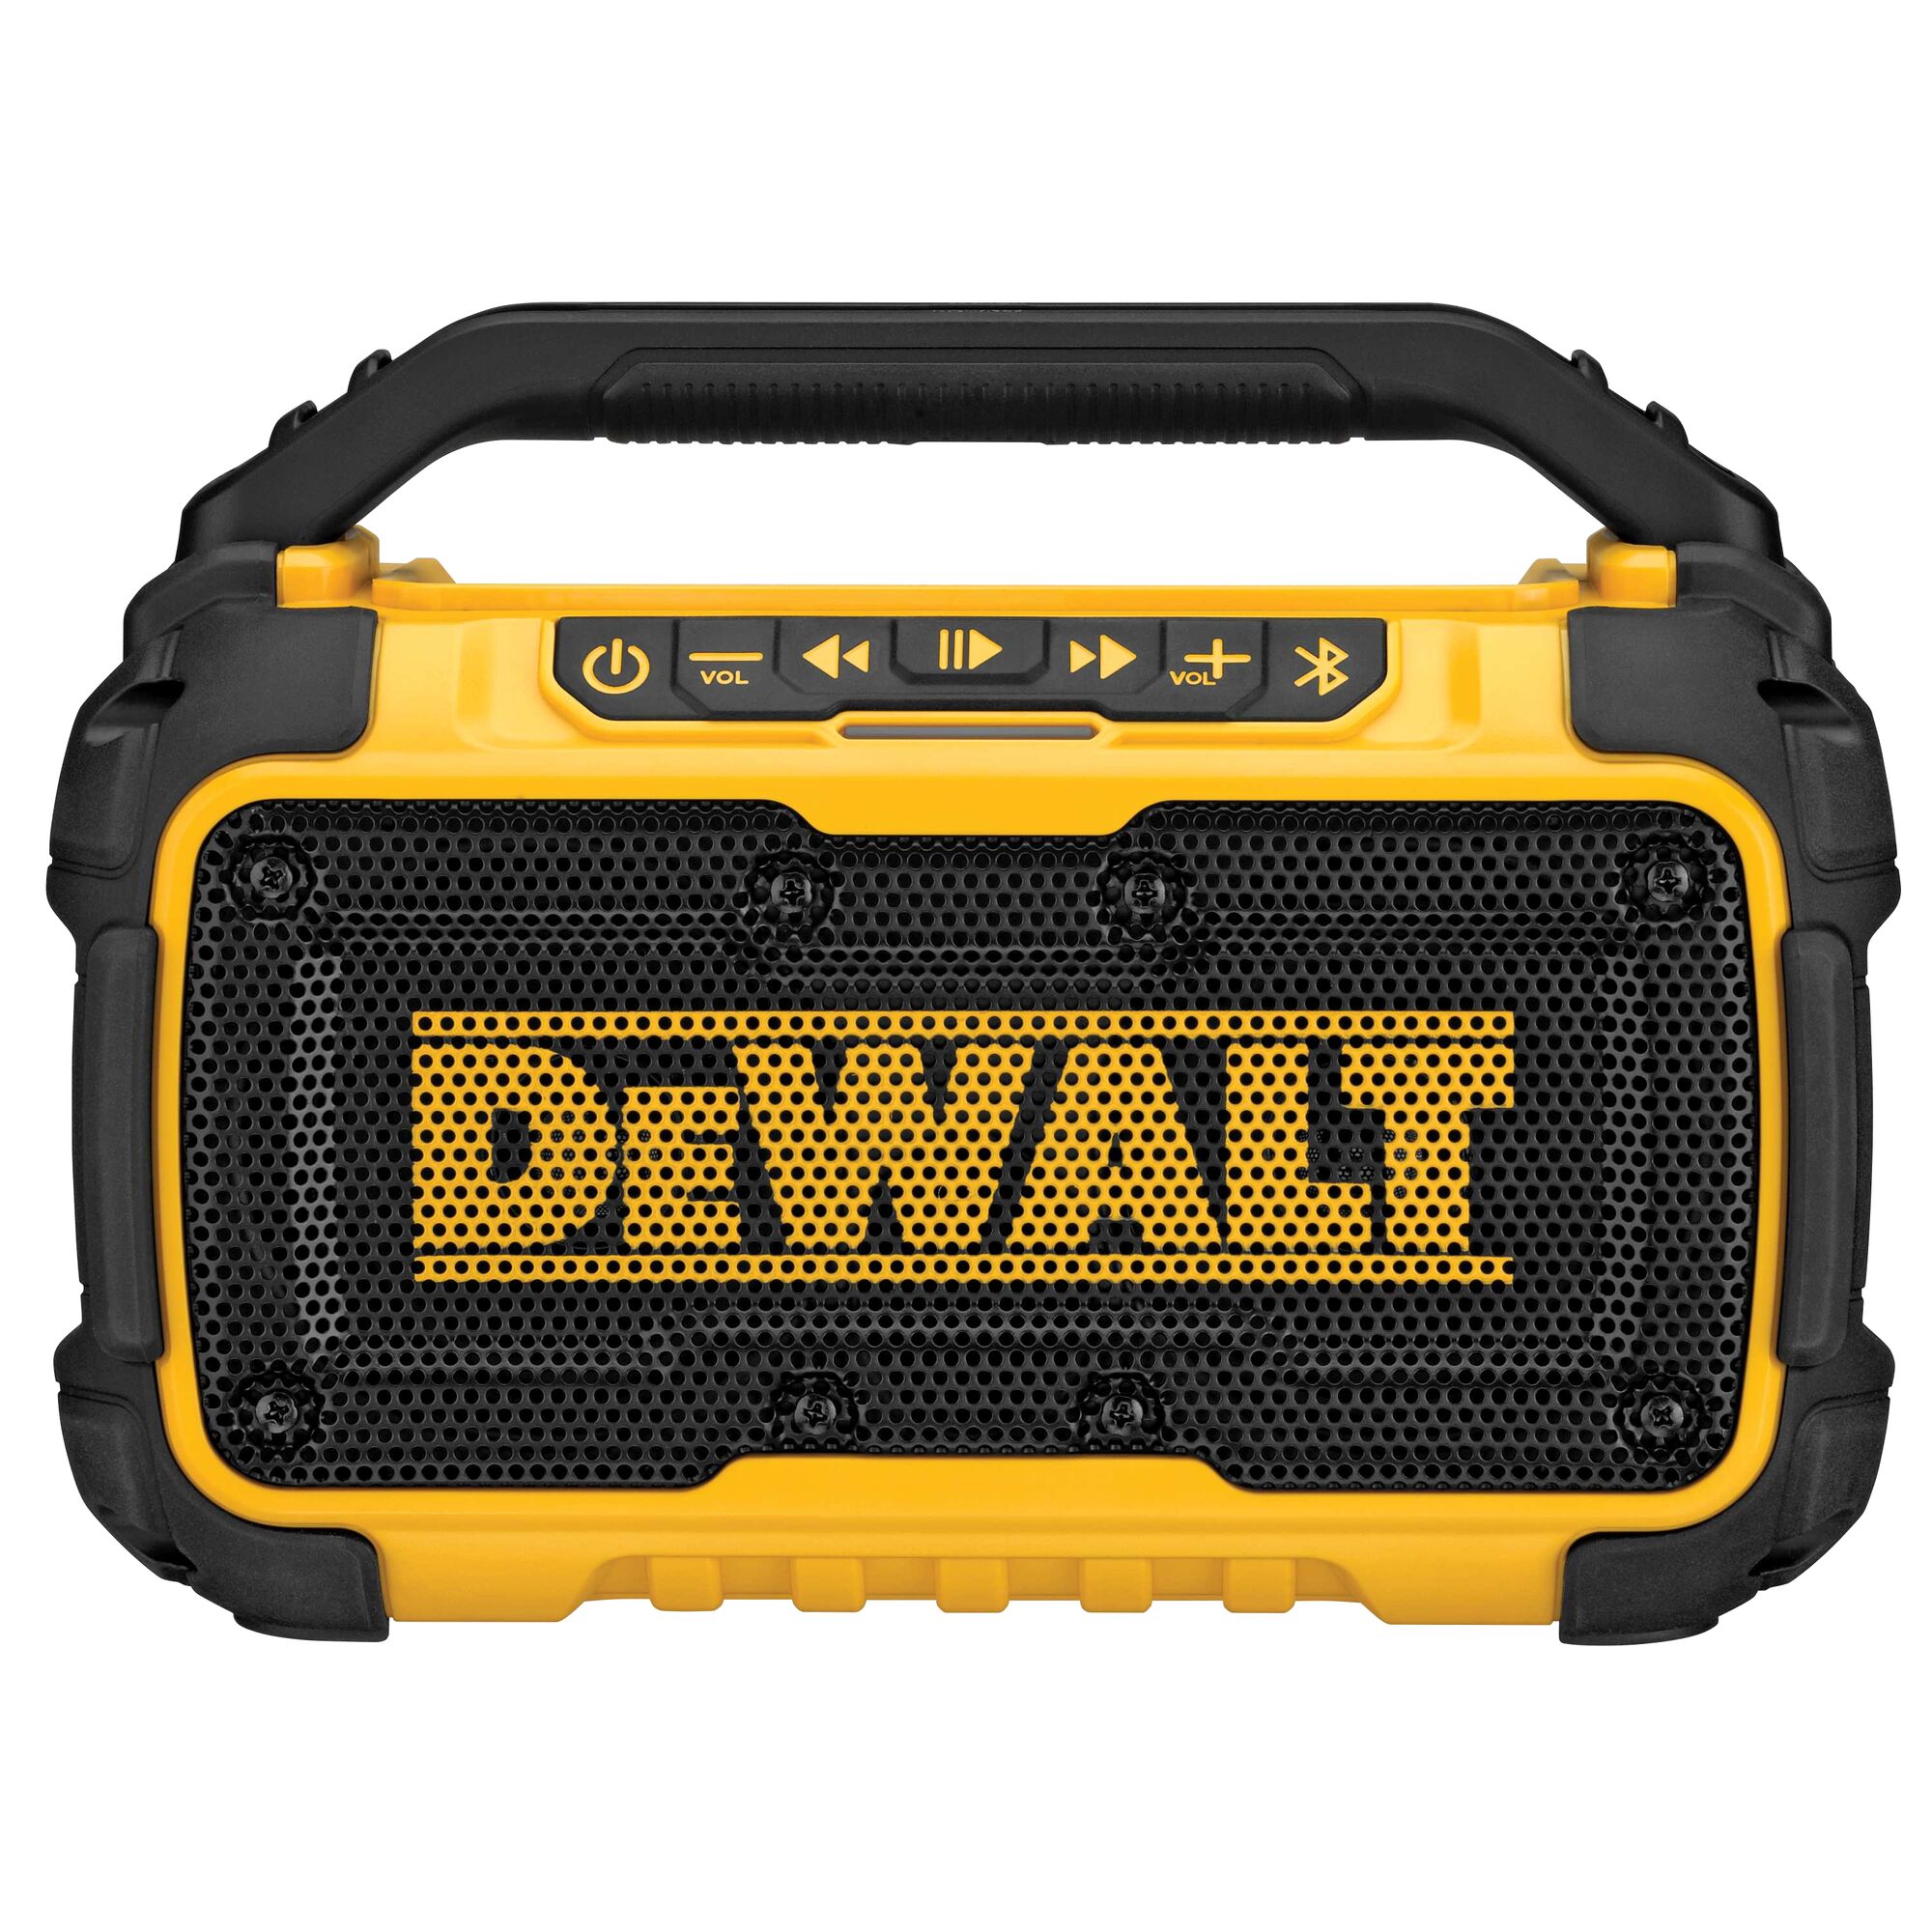 DeWalt TSTAK Bluetooth Radio+Charger Review - Pro Tool Reviews